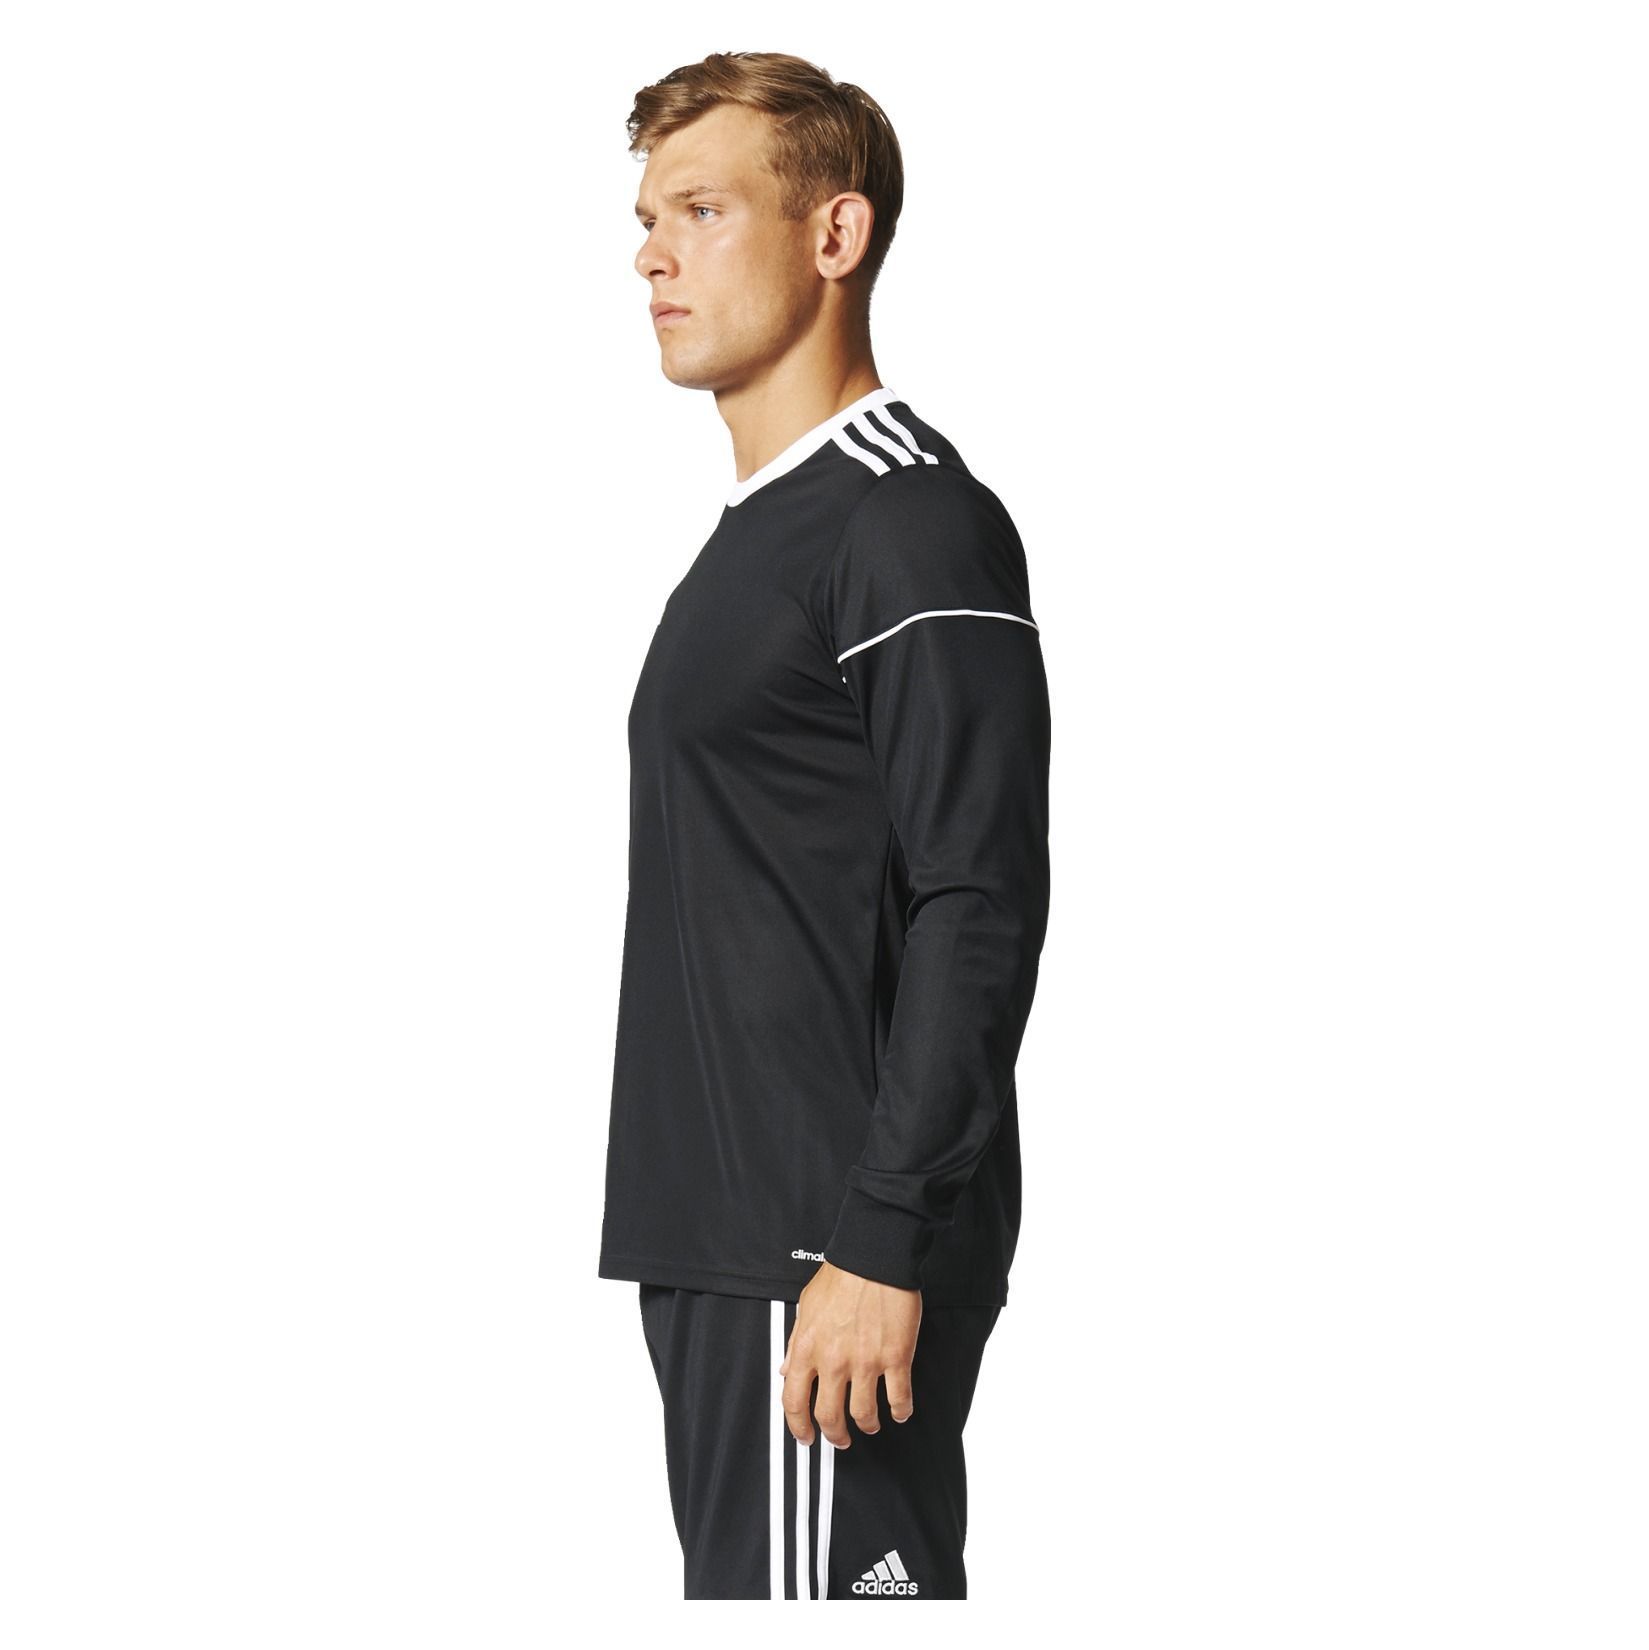 Adidas Squadra 17 Long Sleeve Jersey